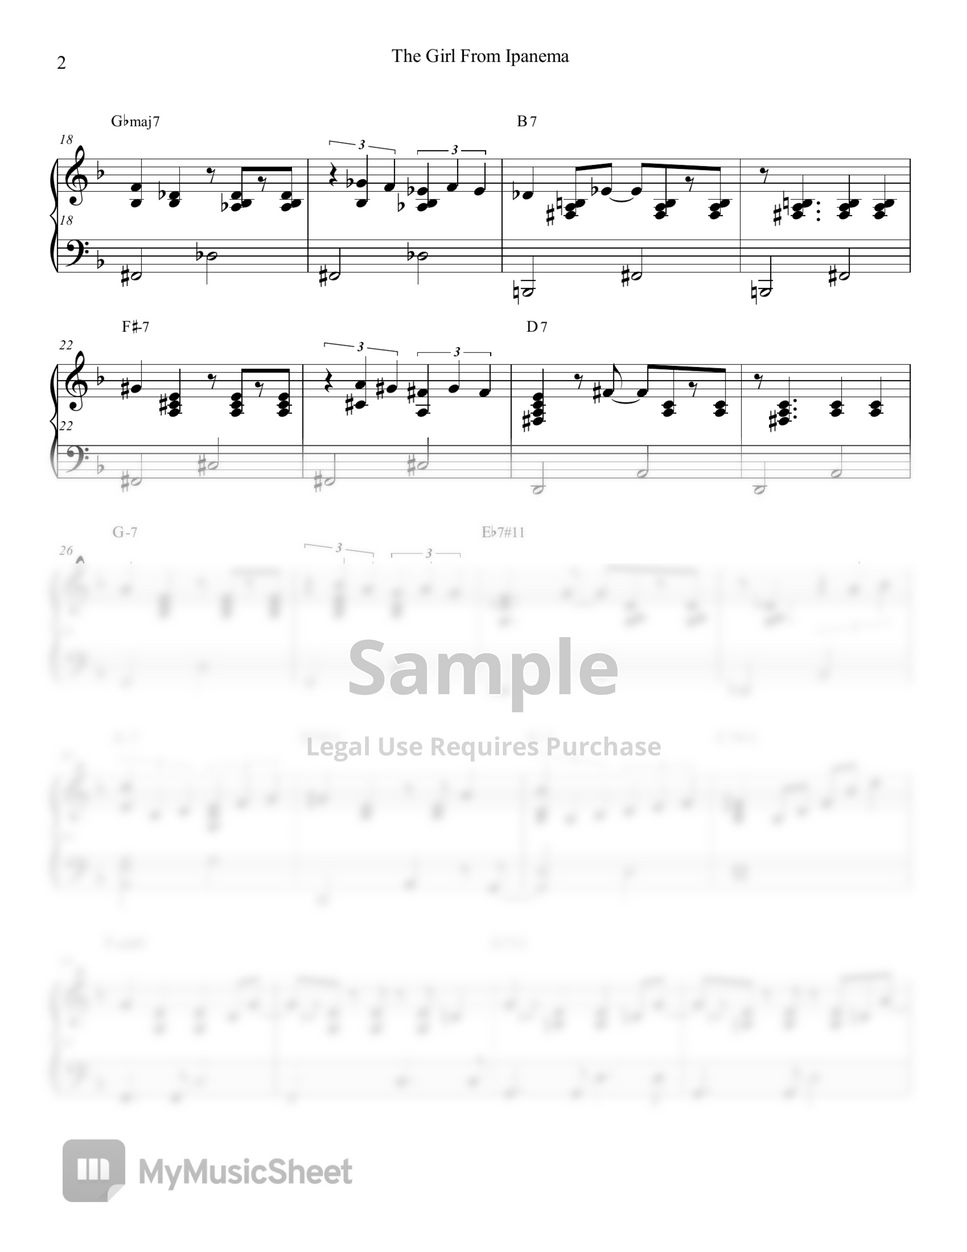 A.C Jobim - The Girl From Ipanema (Bossa Nova Jazz Piano Arrangement) by Koala Piano